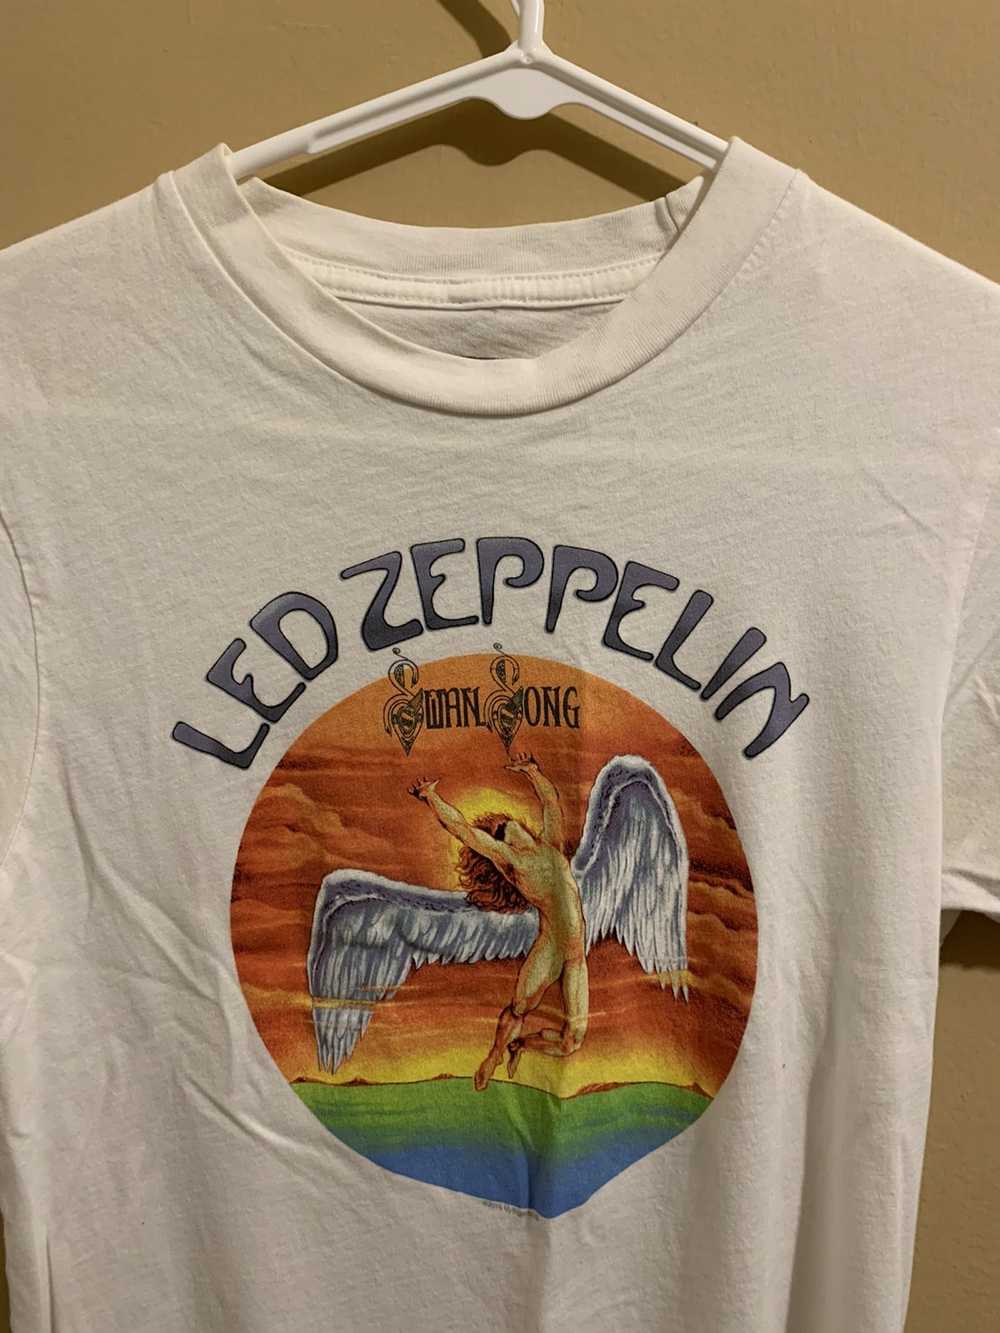 Band Tees × Vintage Led Zeppelin tee - image 1